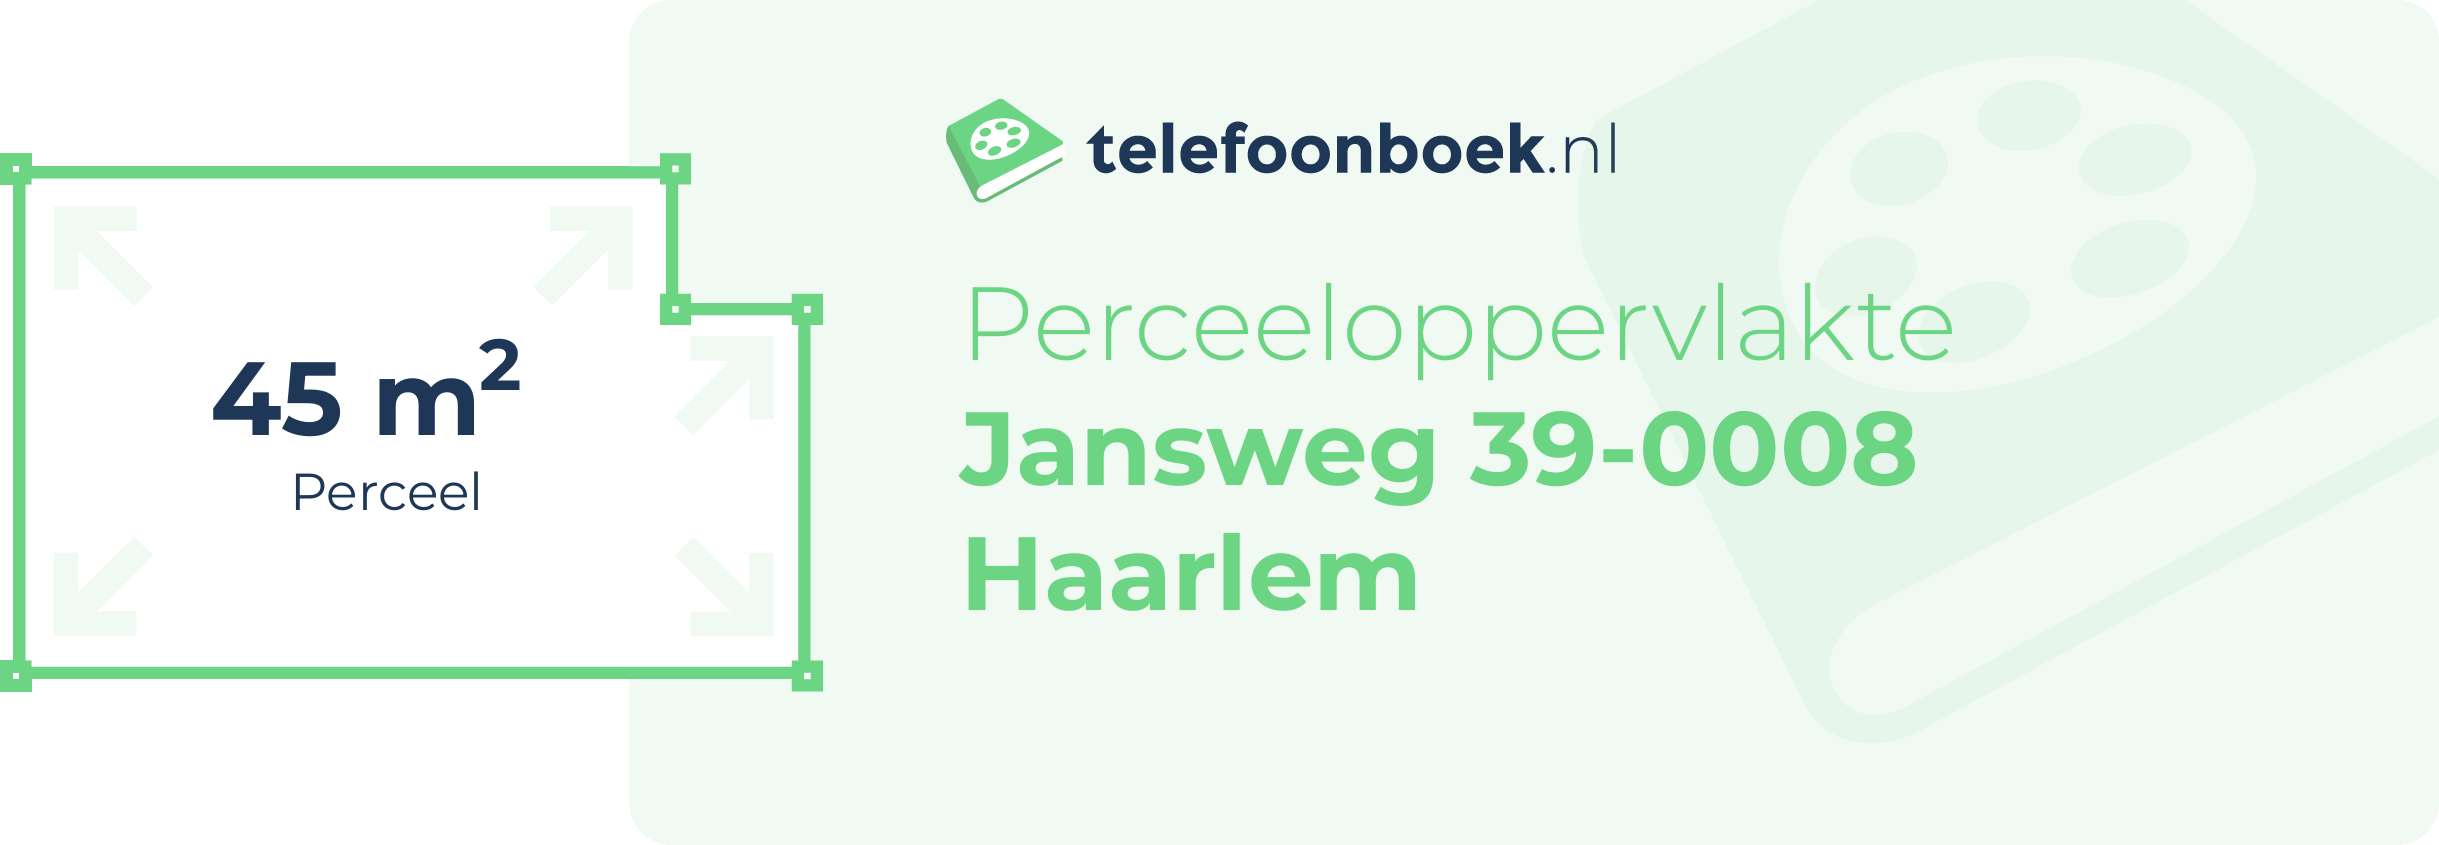 Perceeloppervlakte Jansweg 39-0008 Haarlem